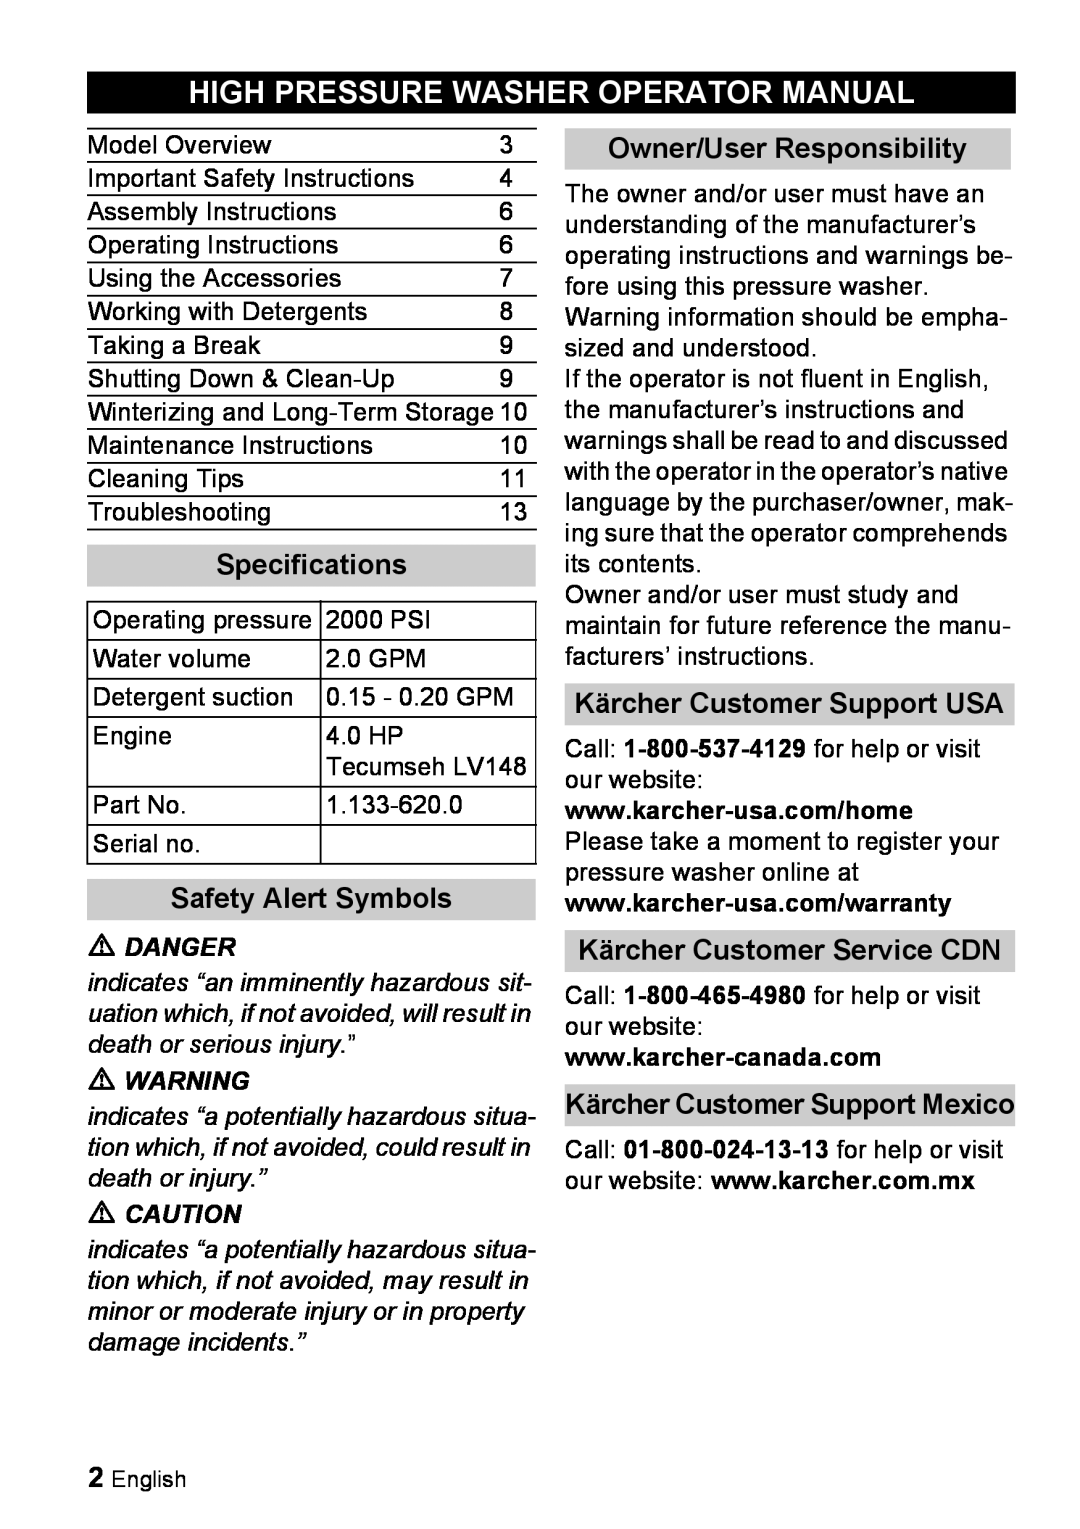 Karcher G 2000 ET High Pressure Washer Operator Manual, Specifications, Safety Alert Symbols, Owner/User Responsibility 